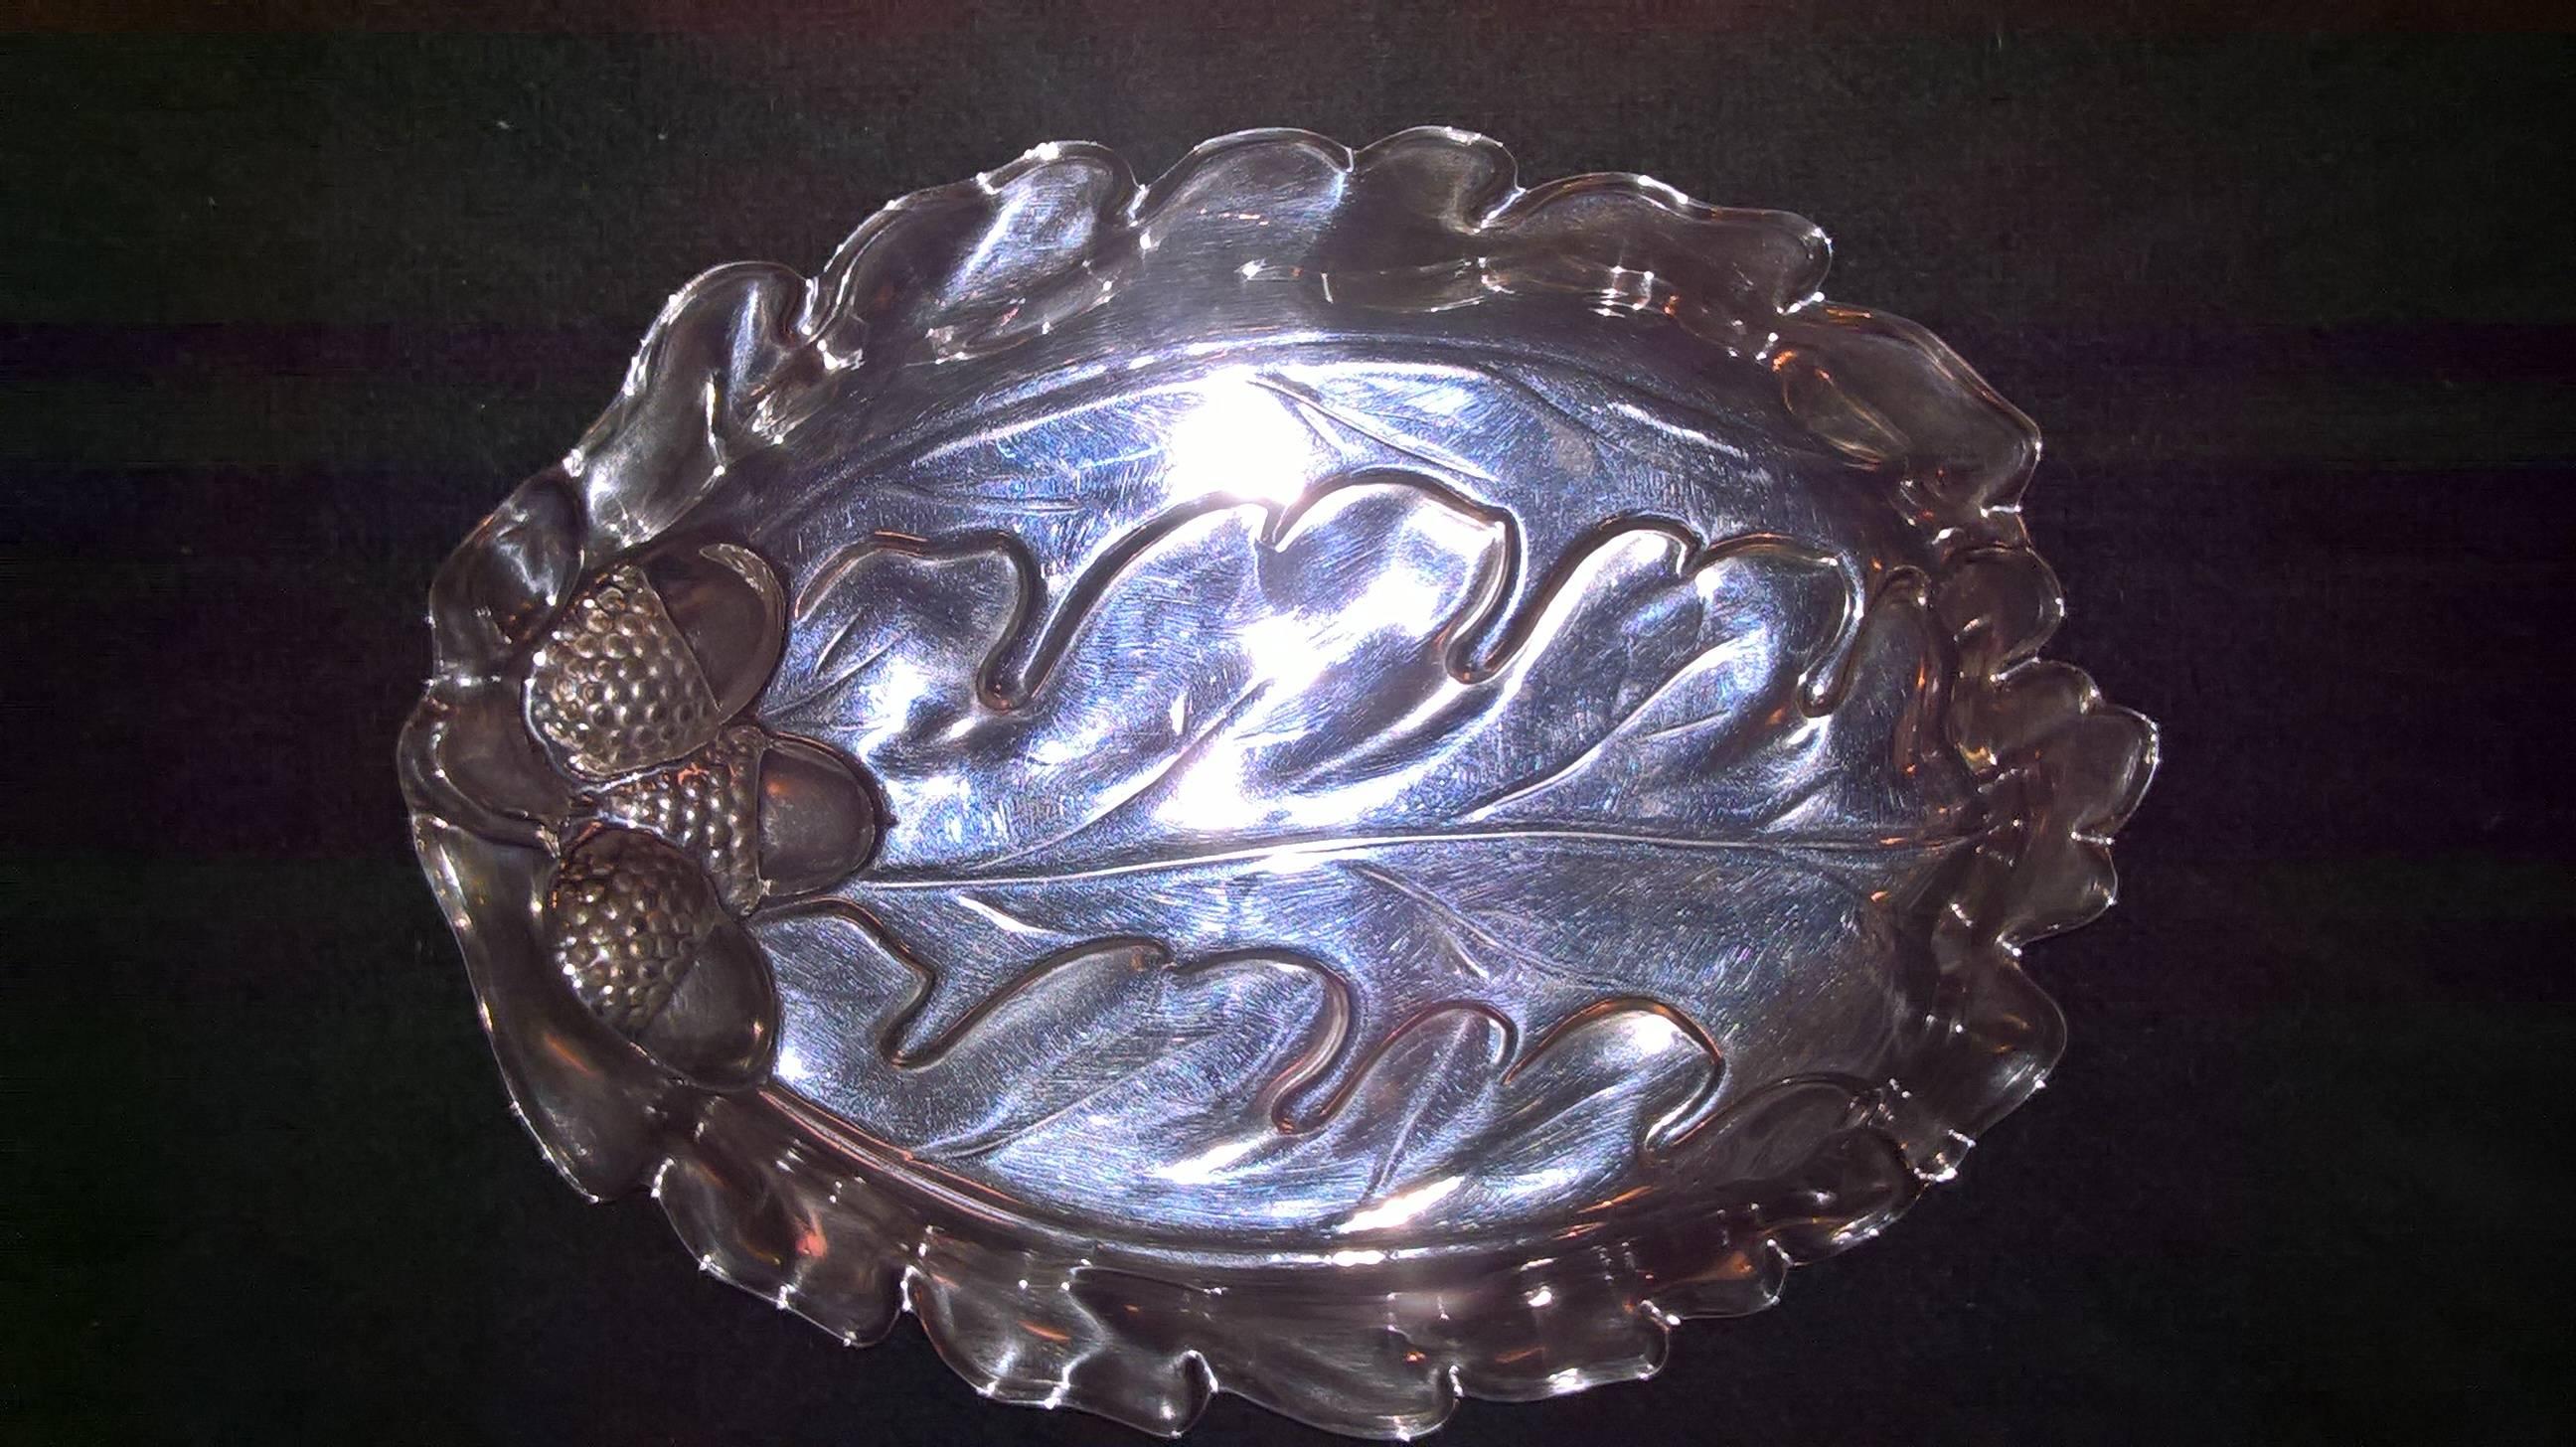 Decorative sterling silver oak leaf bowl with amazing realistic details. Hallmarks.